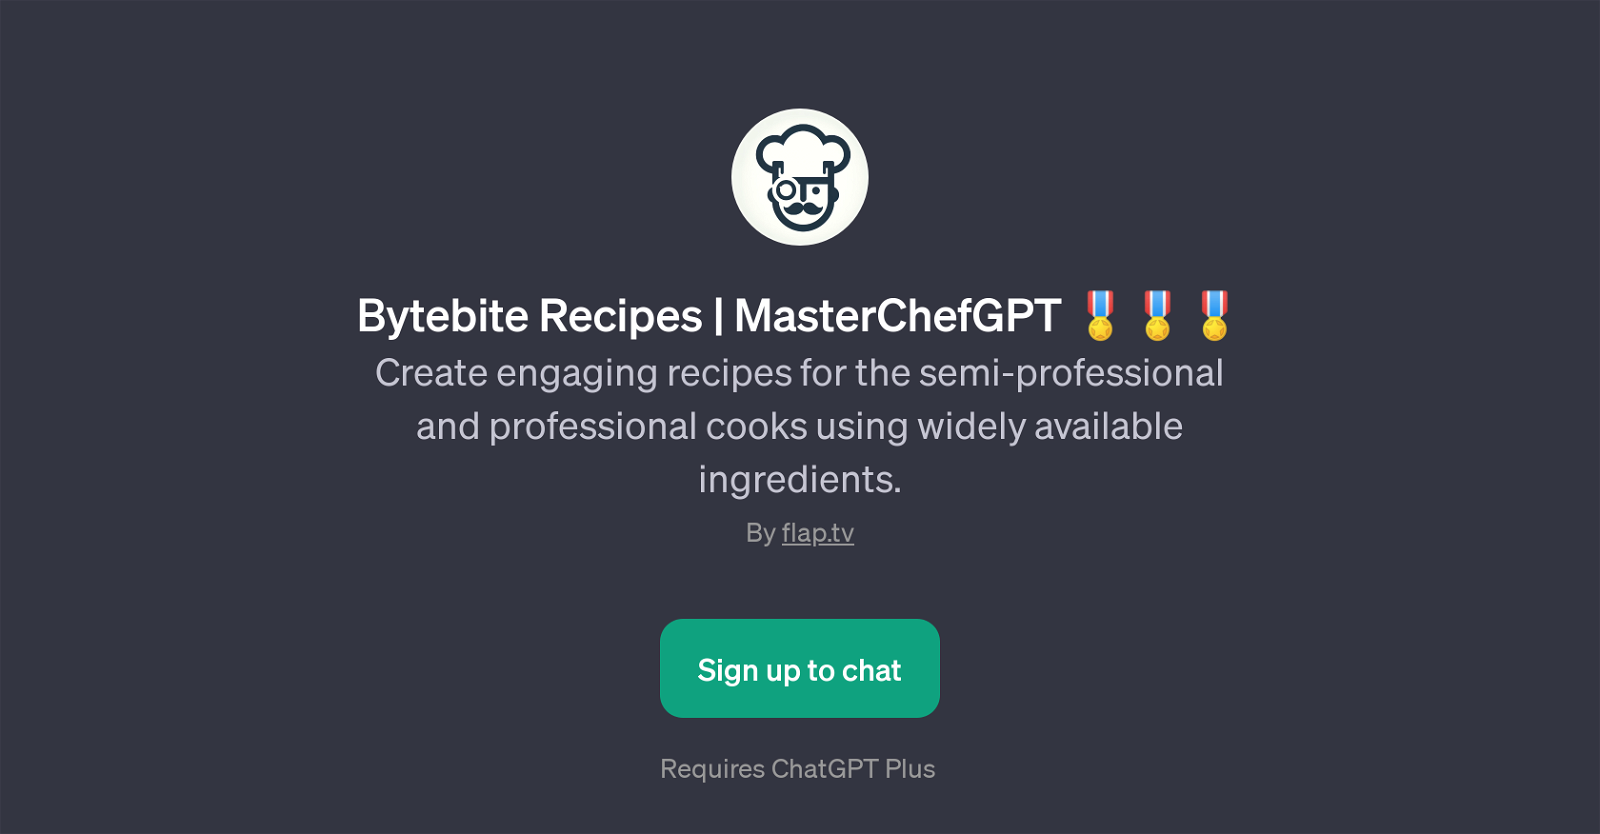 Bytebite Recipes | MasterChefGPT website